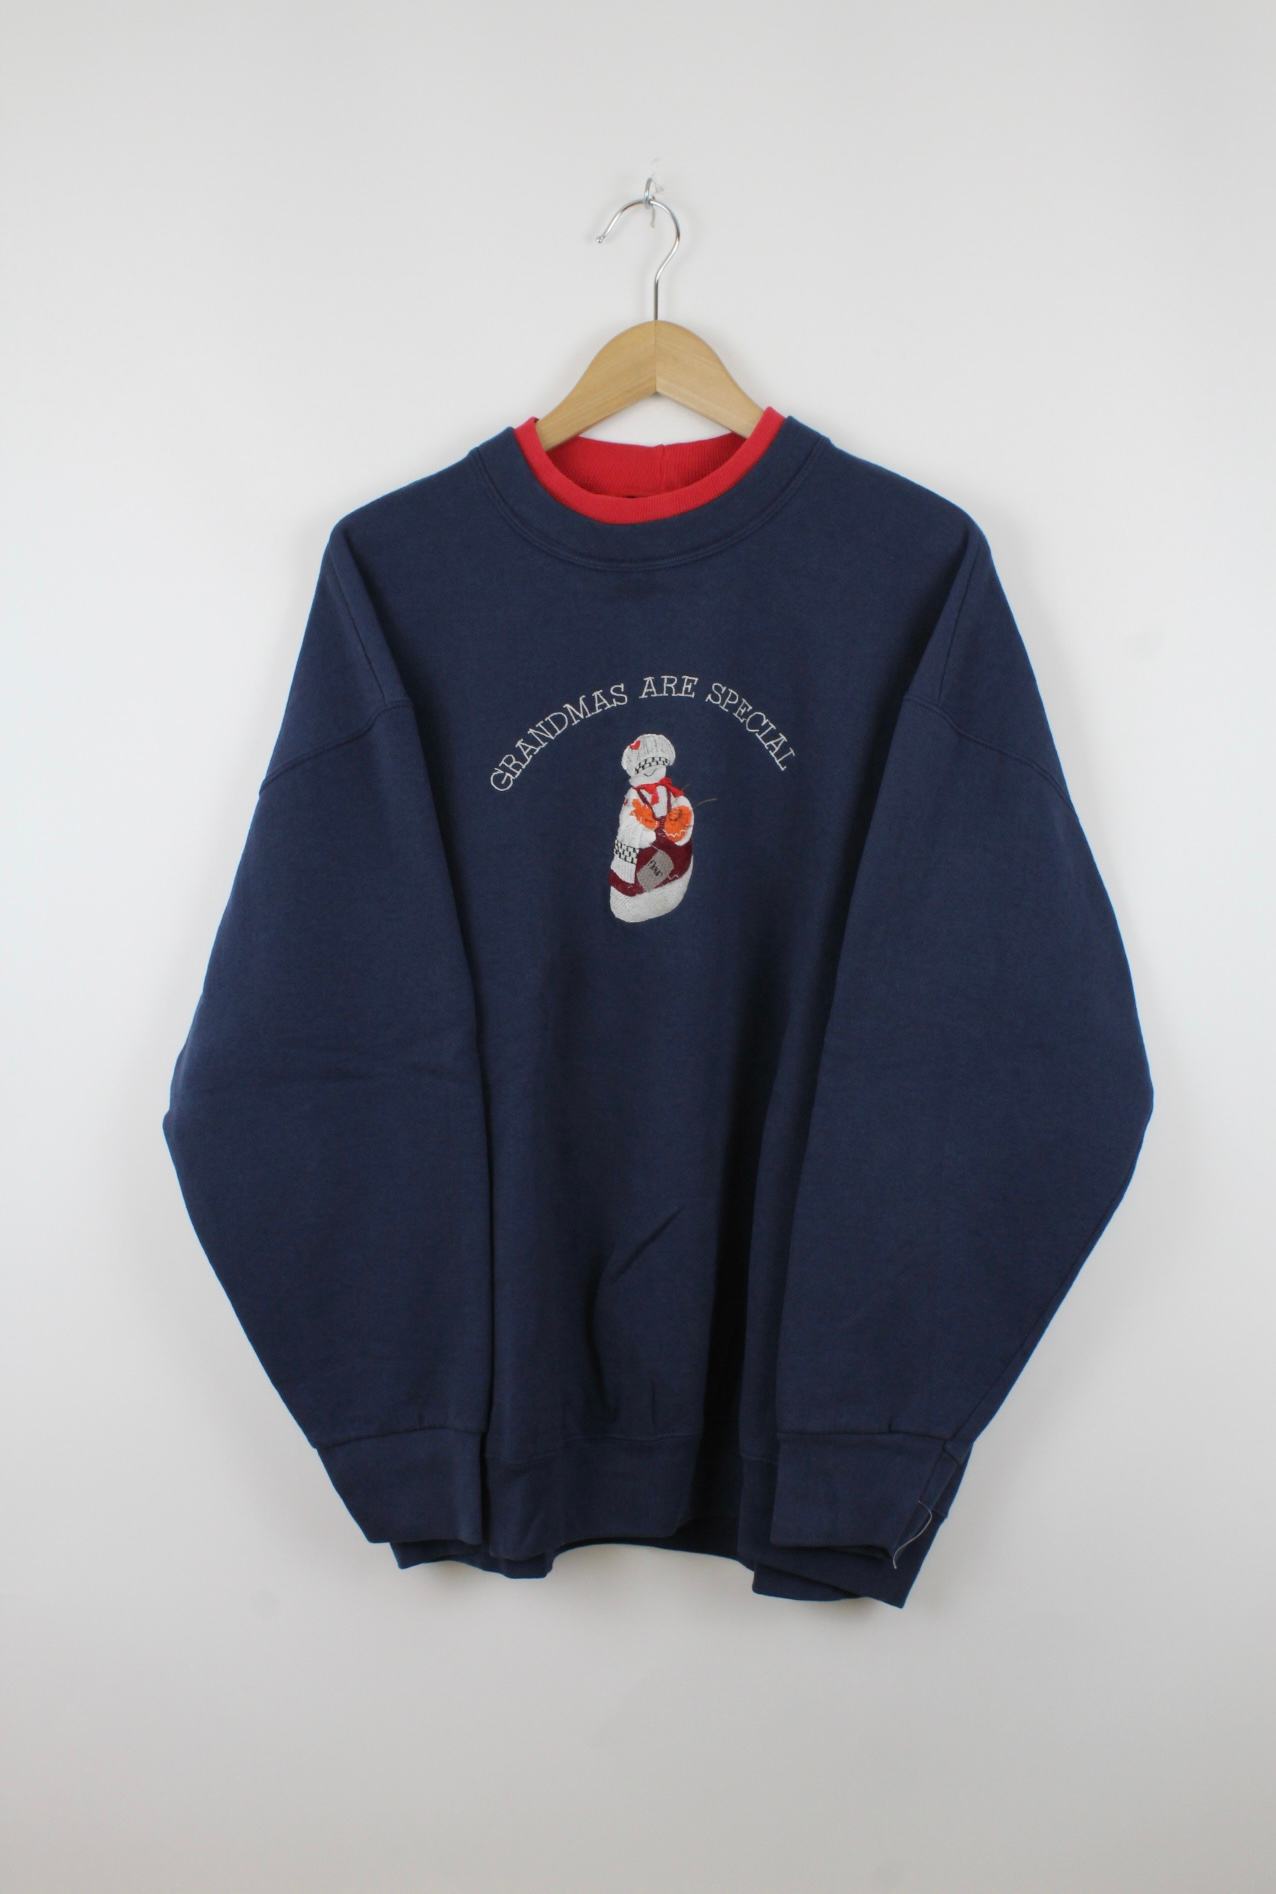 Vintage USA Sweater Blau - XXL